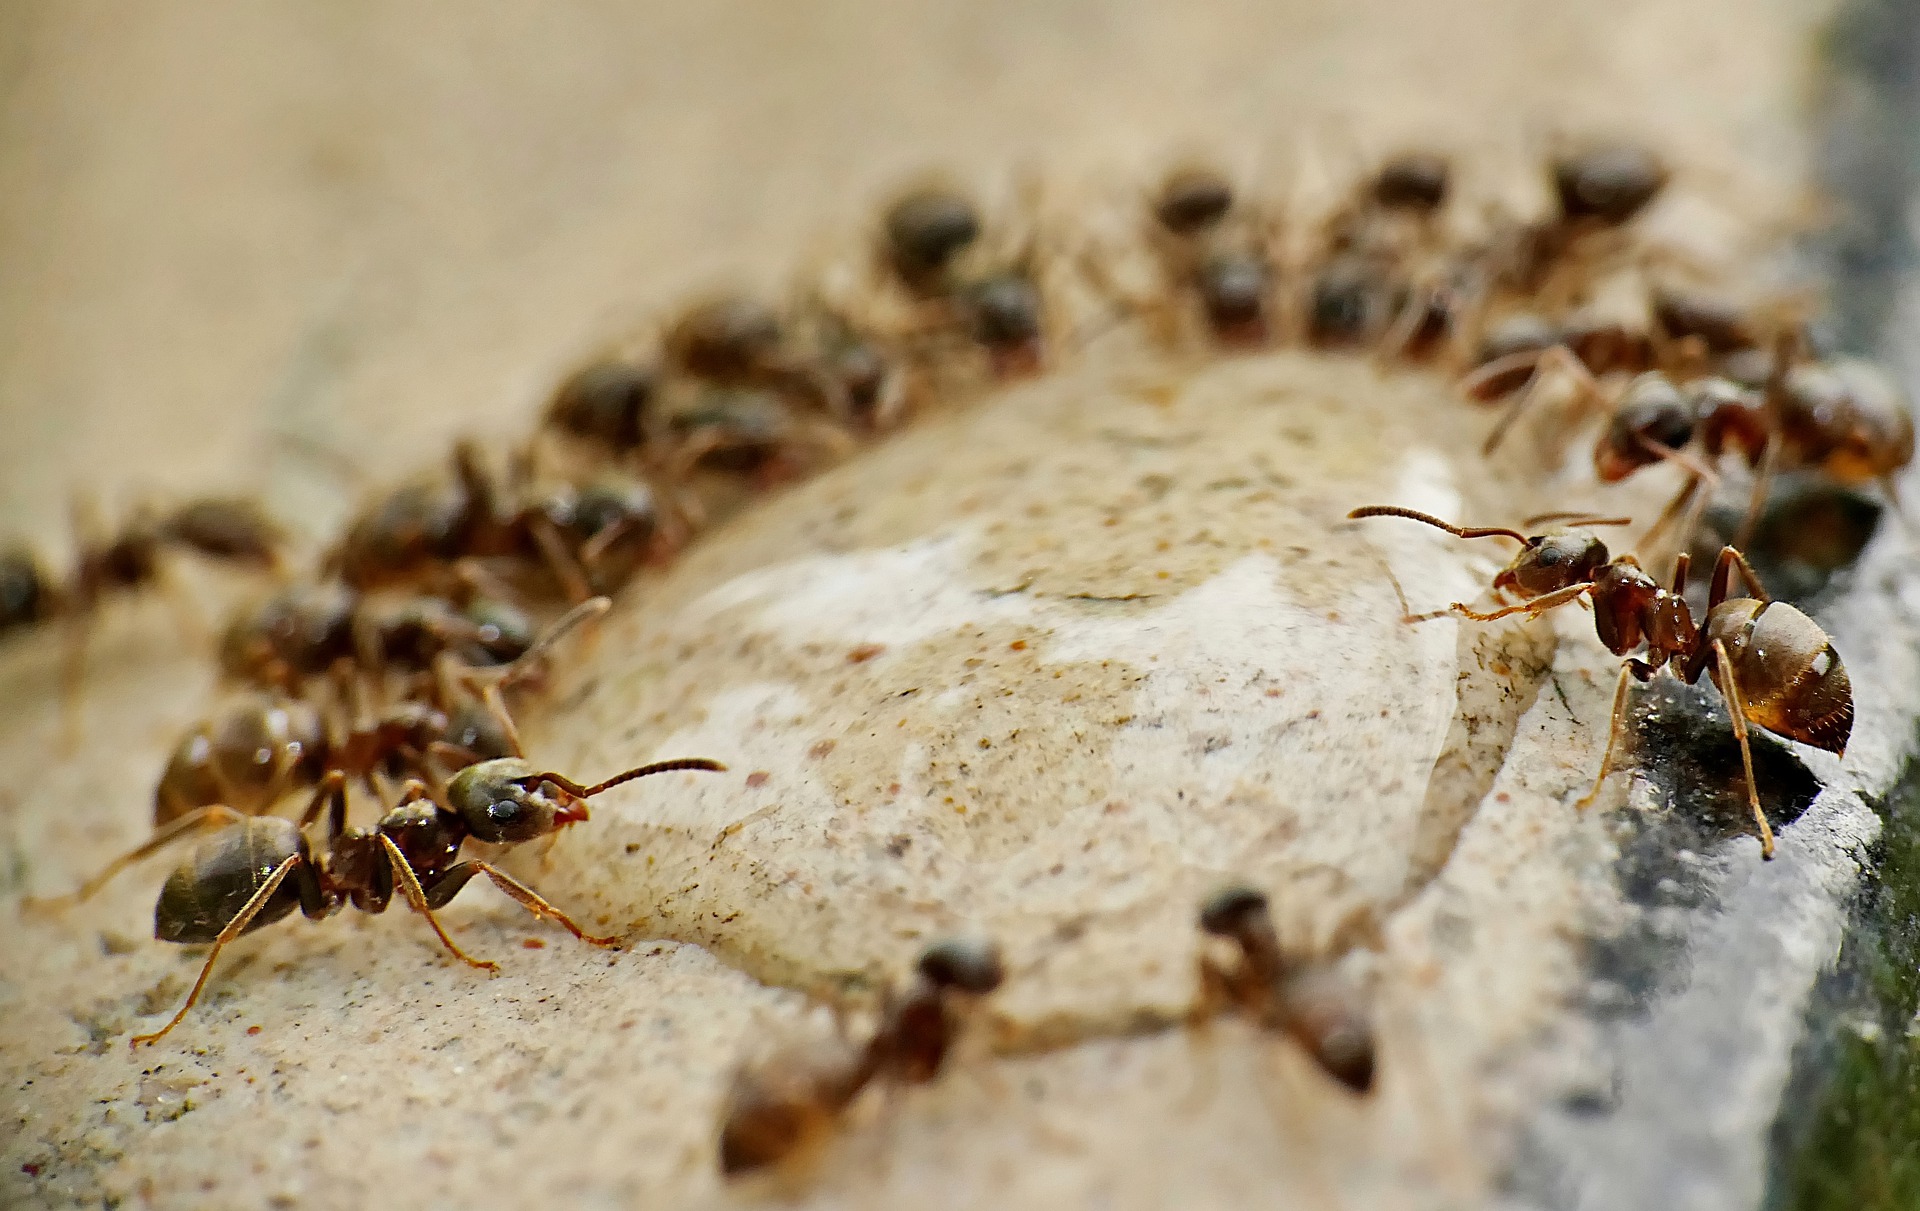 Betsy Trotwood will do Strictly Cum sa scapi de furnici. 9 solutii naturale care dau REZULTATE! -  Sfatulparintilor.ro